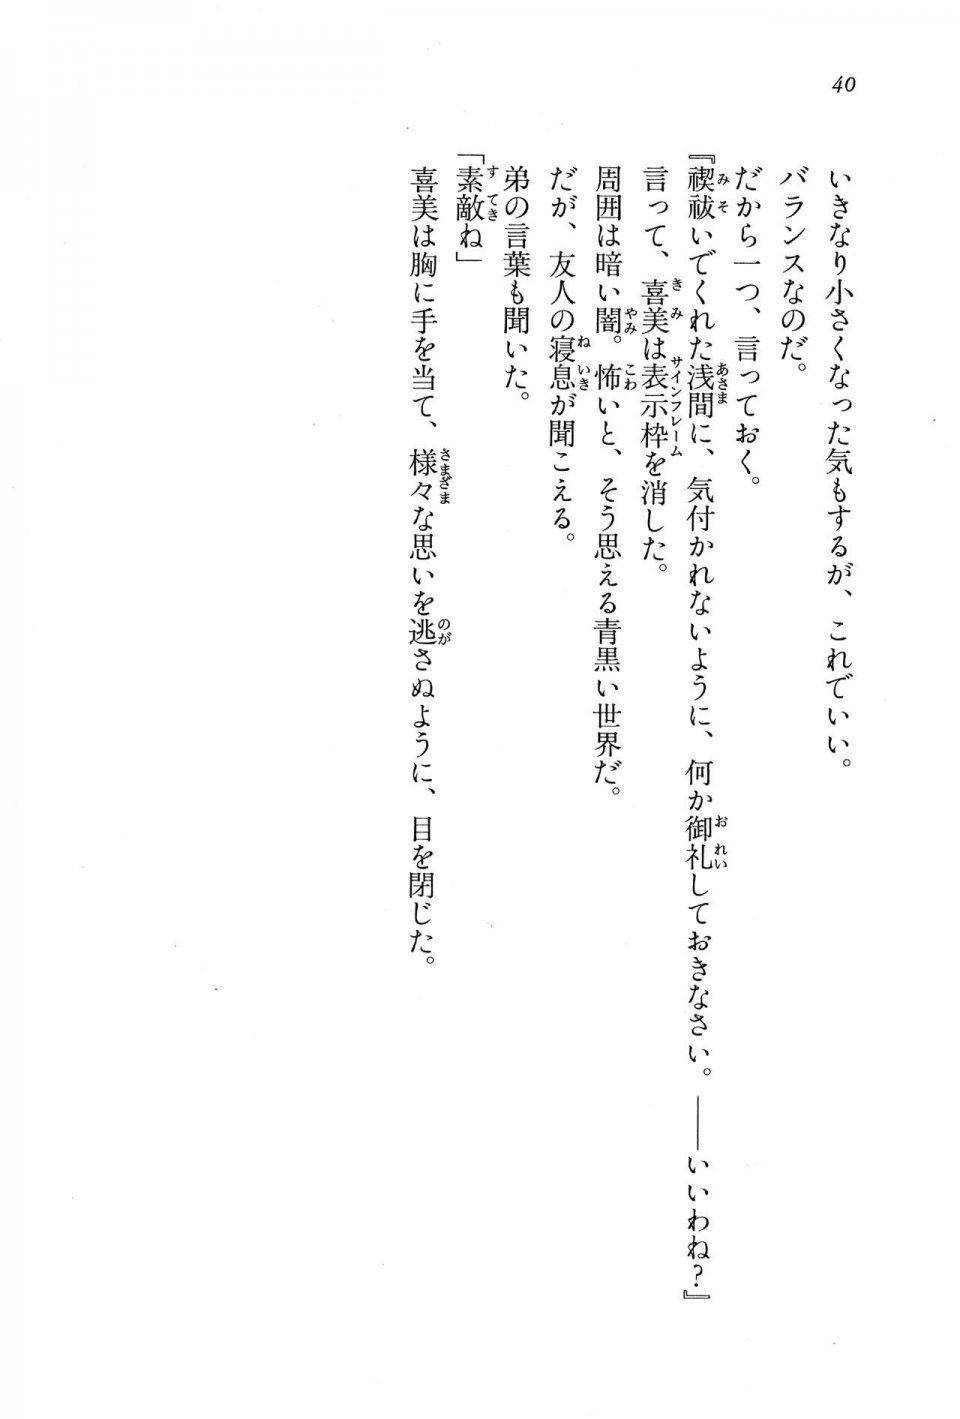 Kyoukai Senjou no Horizon BD Special Mininovel Vol 7(4A) - Photo #44